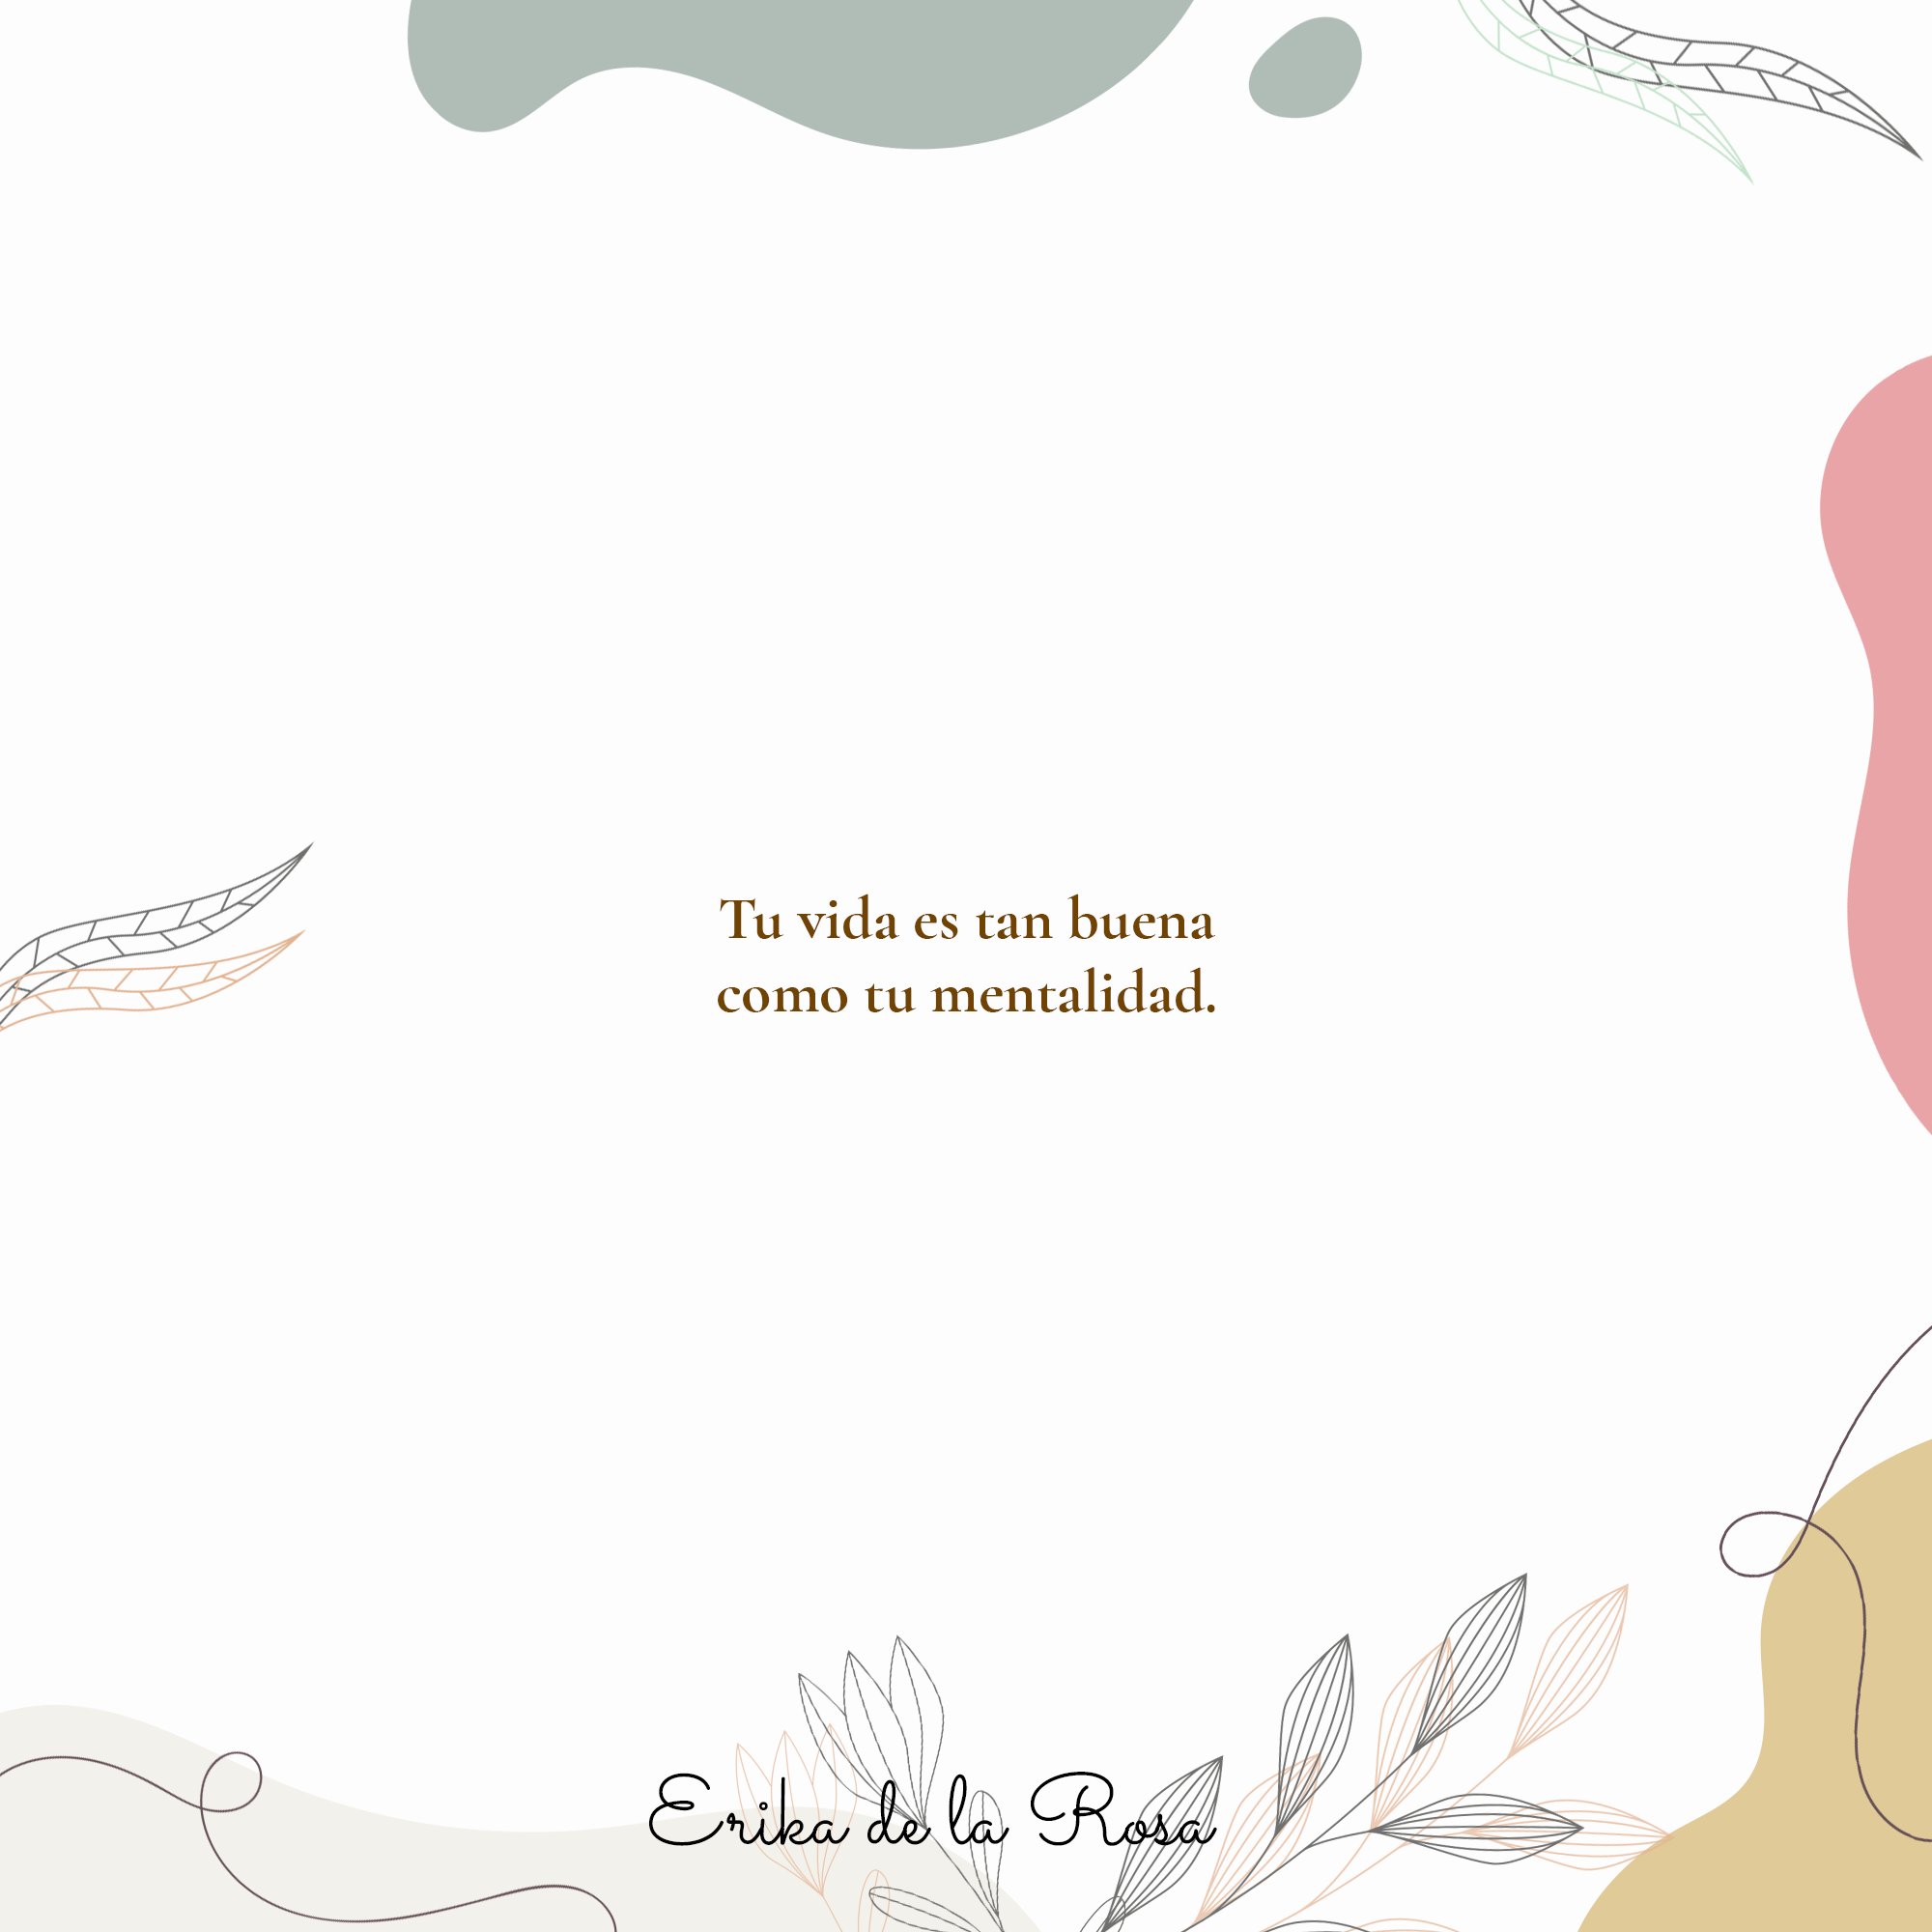 ¿Cuál es su #Actitud para este día? 😉💛 #GoodVibes #FelizMiércoles https://t.co/Vkc4GLjfIH